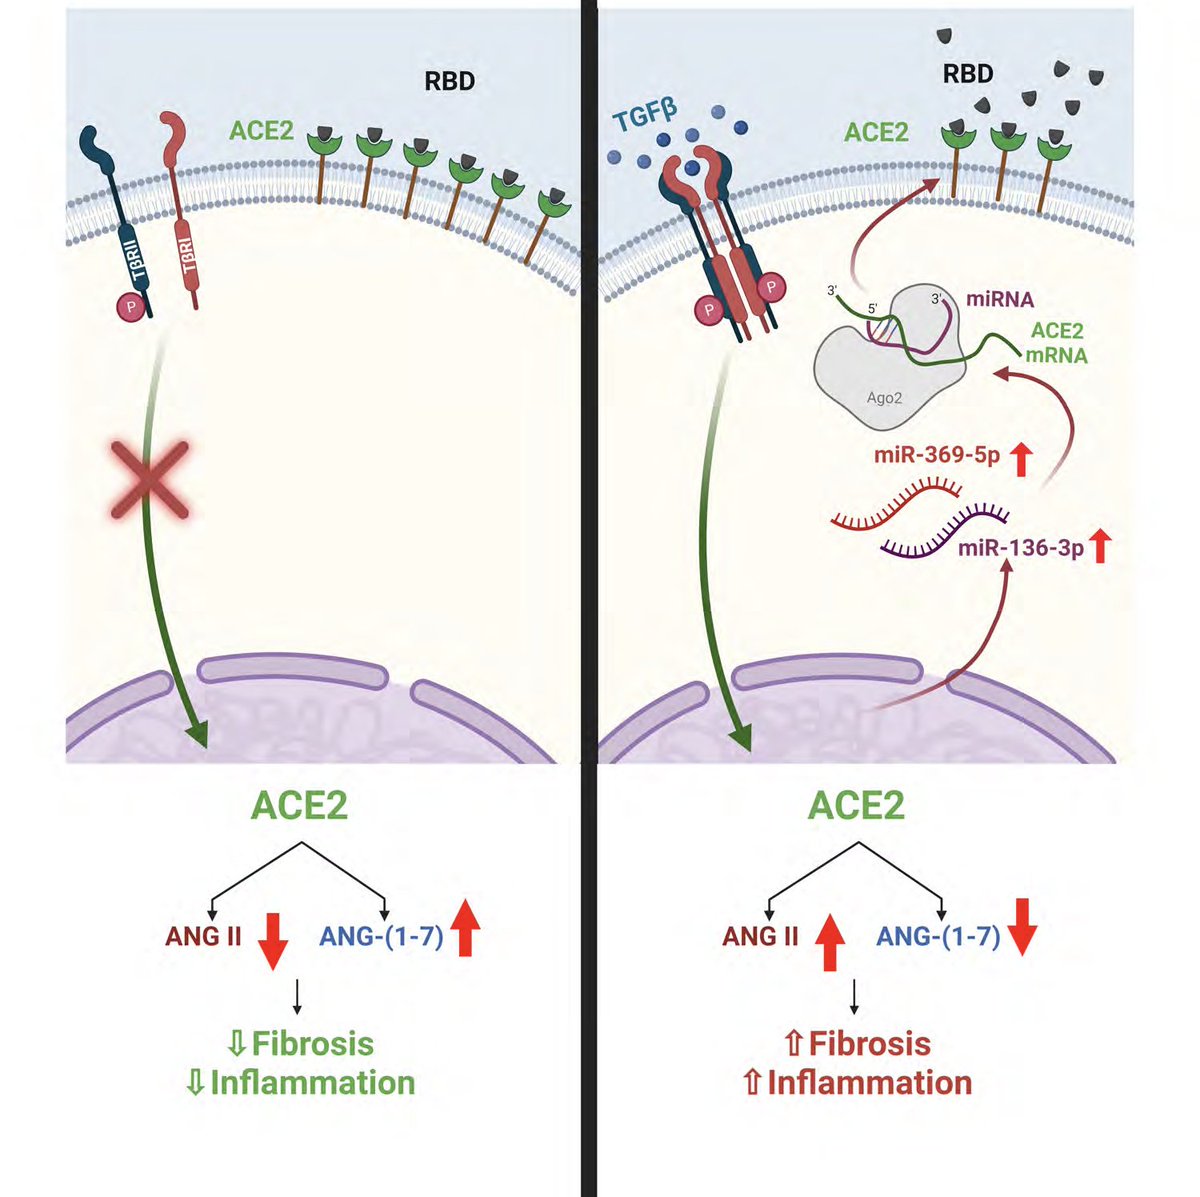 Dr. Swiatecka-Urban published a manuscript in the Journal of Innate Immunity: “TGF-β1 inhibition of ACE2 mediated by miRNA uncovers novel mechanism of SARS-CoV-2 pathogenesis.” Hejenkowska et al., DOI: 10.1159/000533606 @uvahealthnews @UVAPediatrics